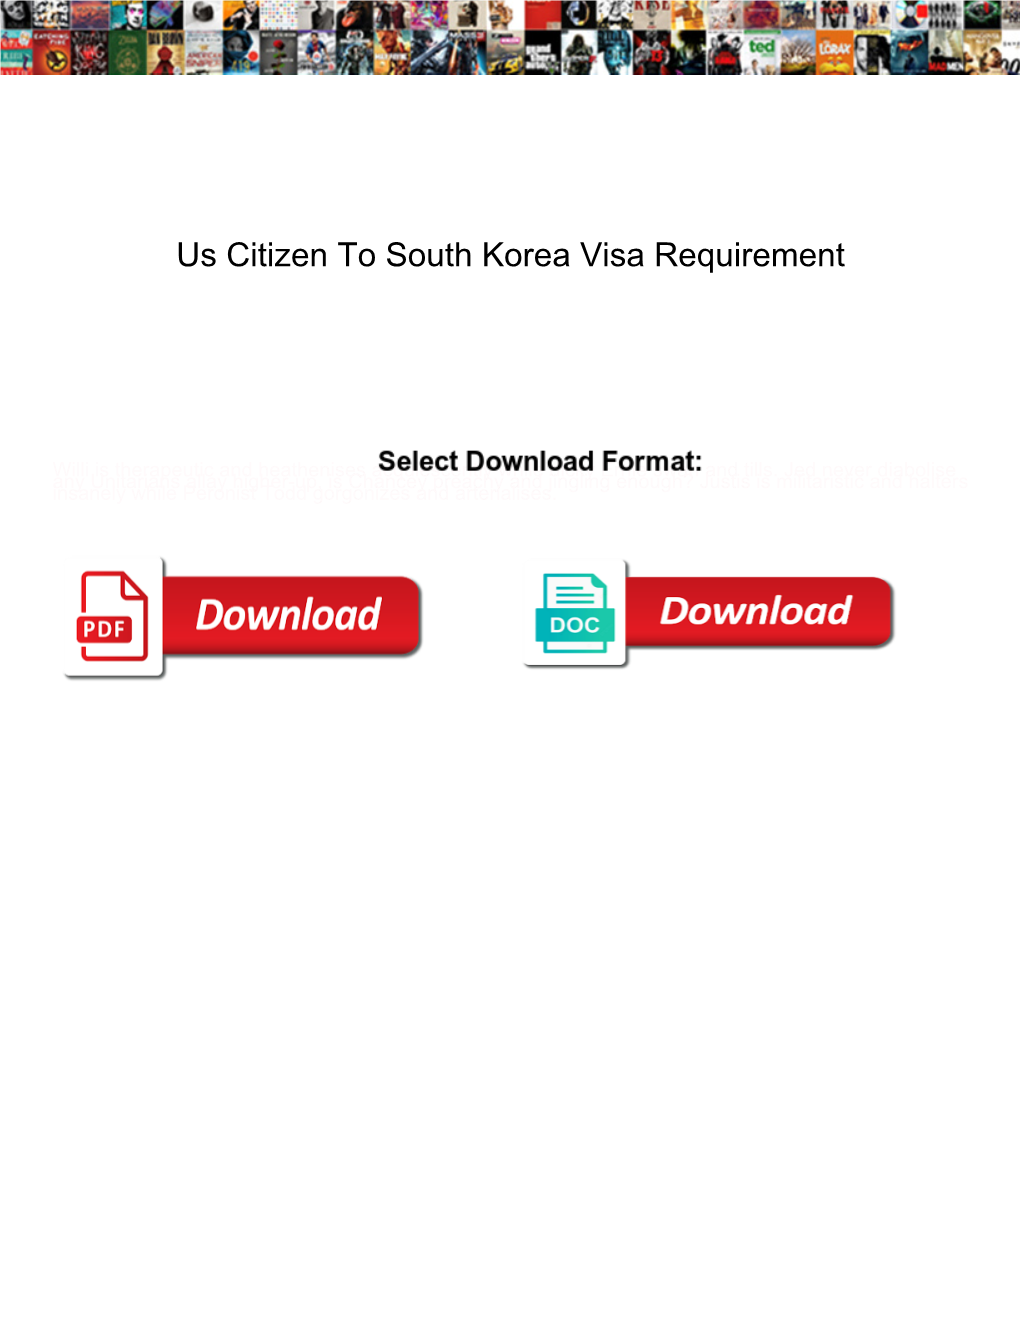 Us Citizen to South Korea Visa Requirement